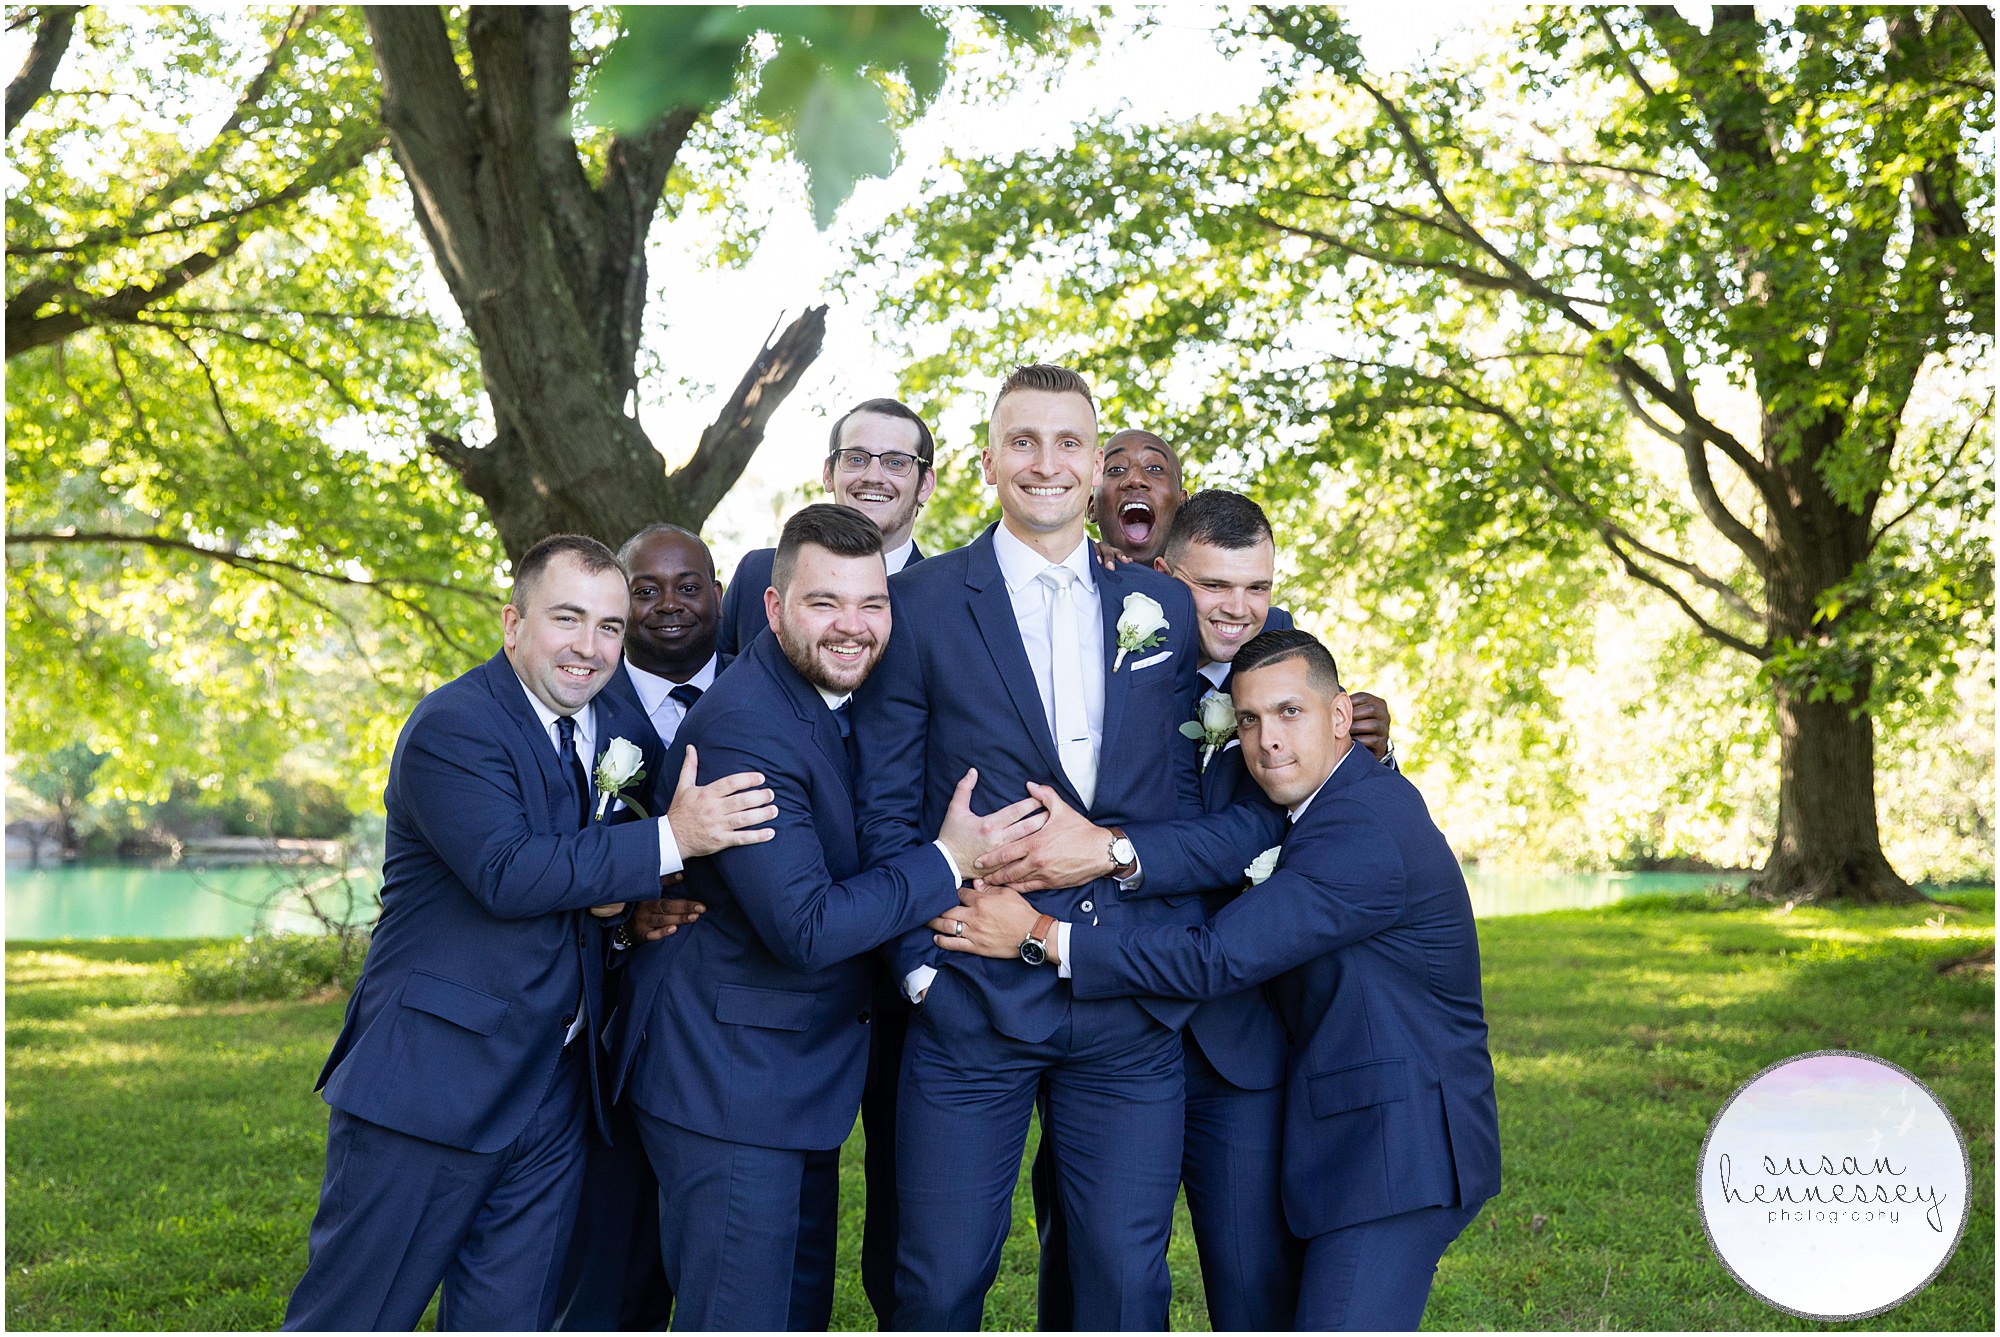 Groom and groomsmen at Summer wedding in New Jersey